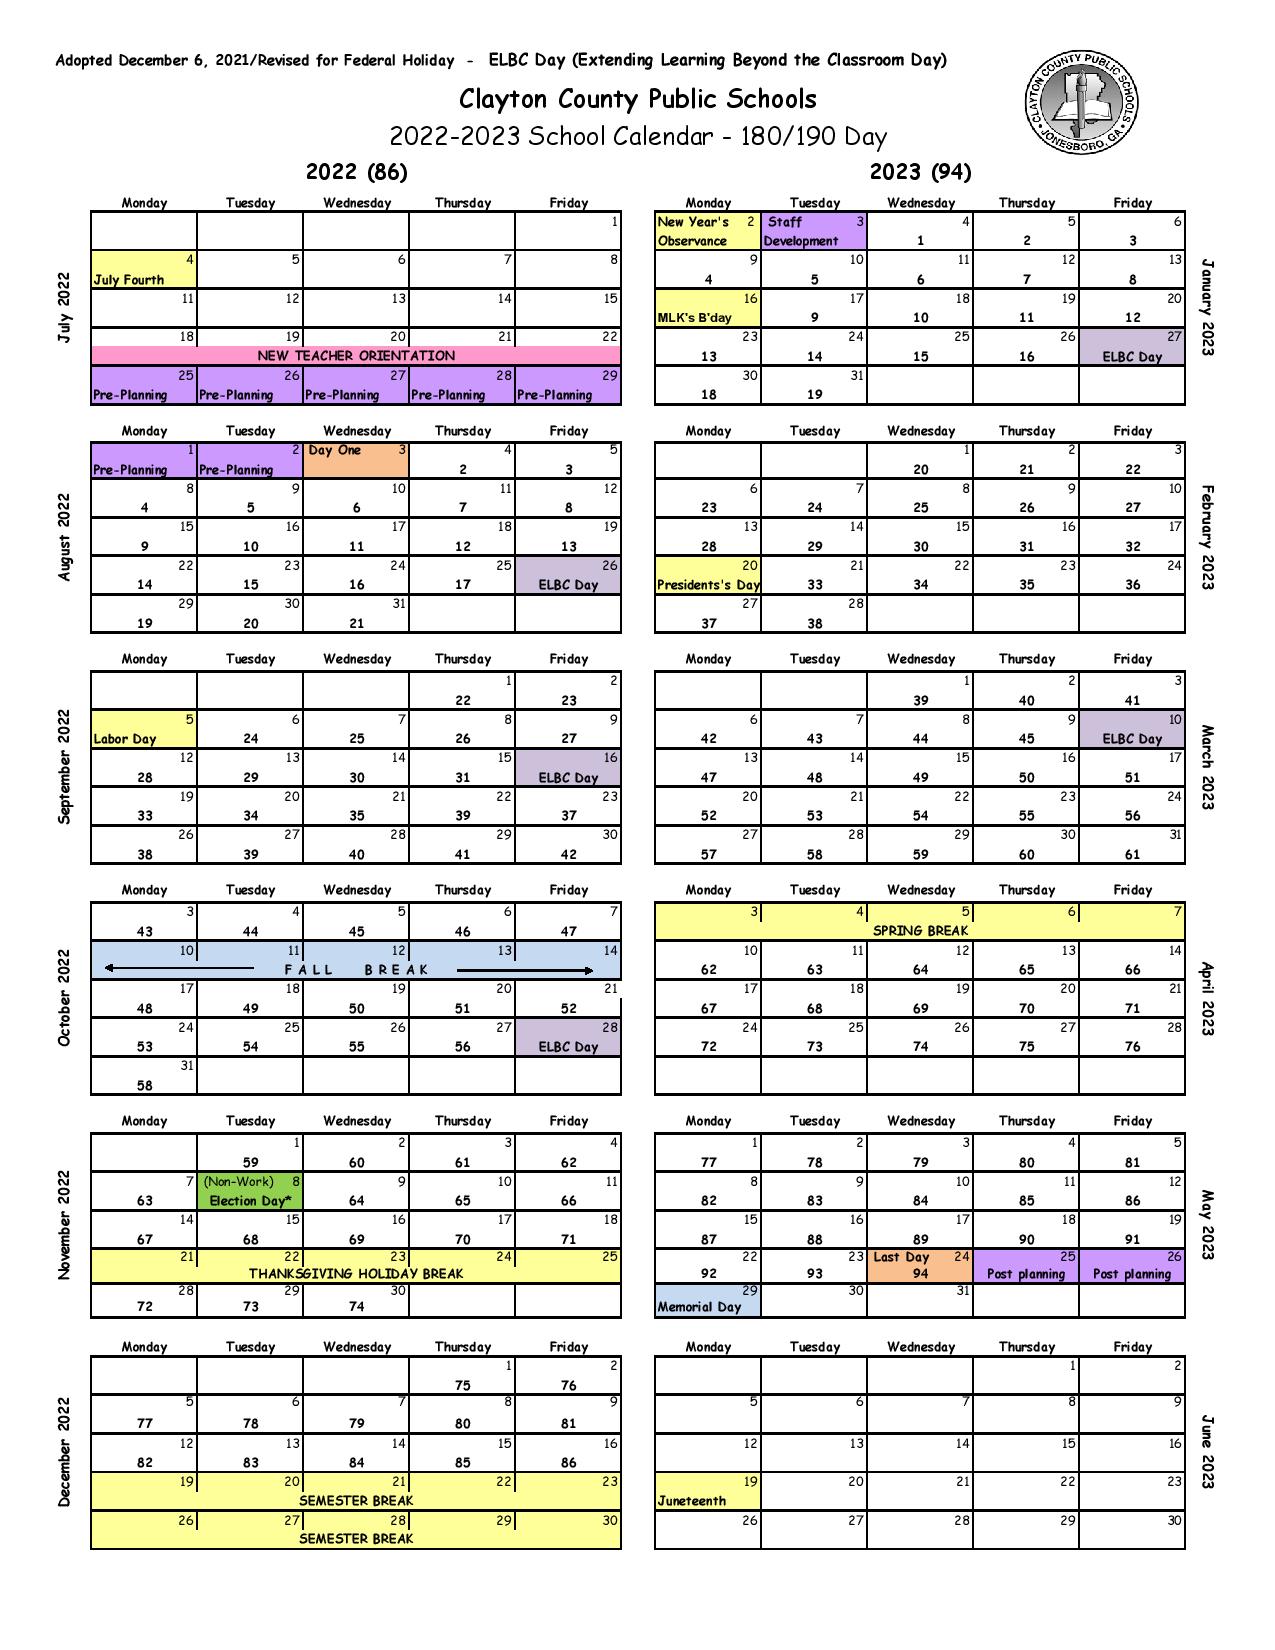 Clayton County Public Schools Calendar Holidays 2022 2023